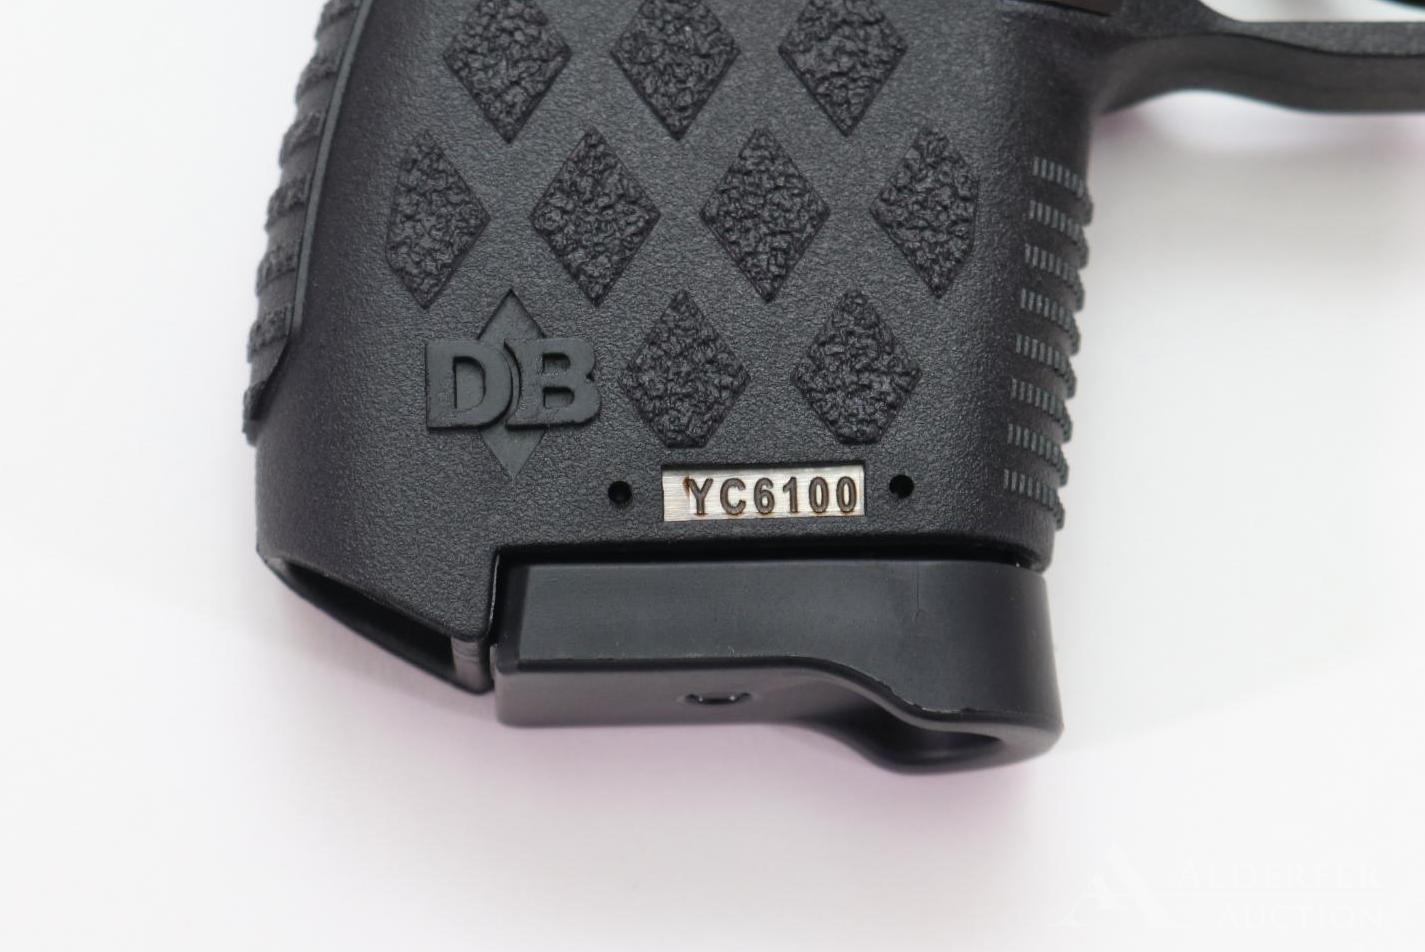 Diamondback DB9 Semi-Automatic Pistol.